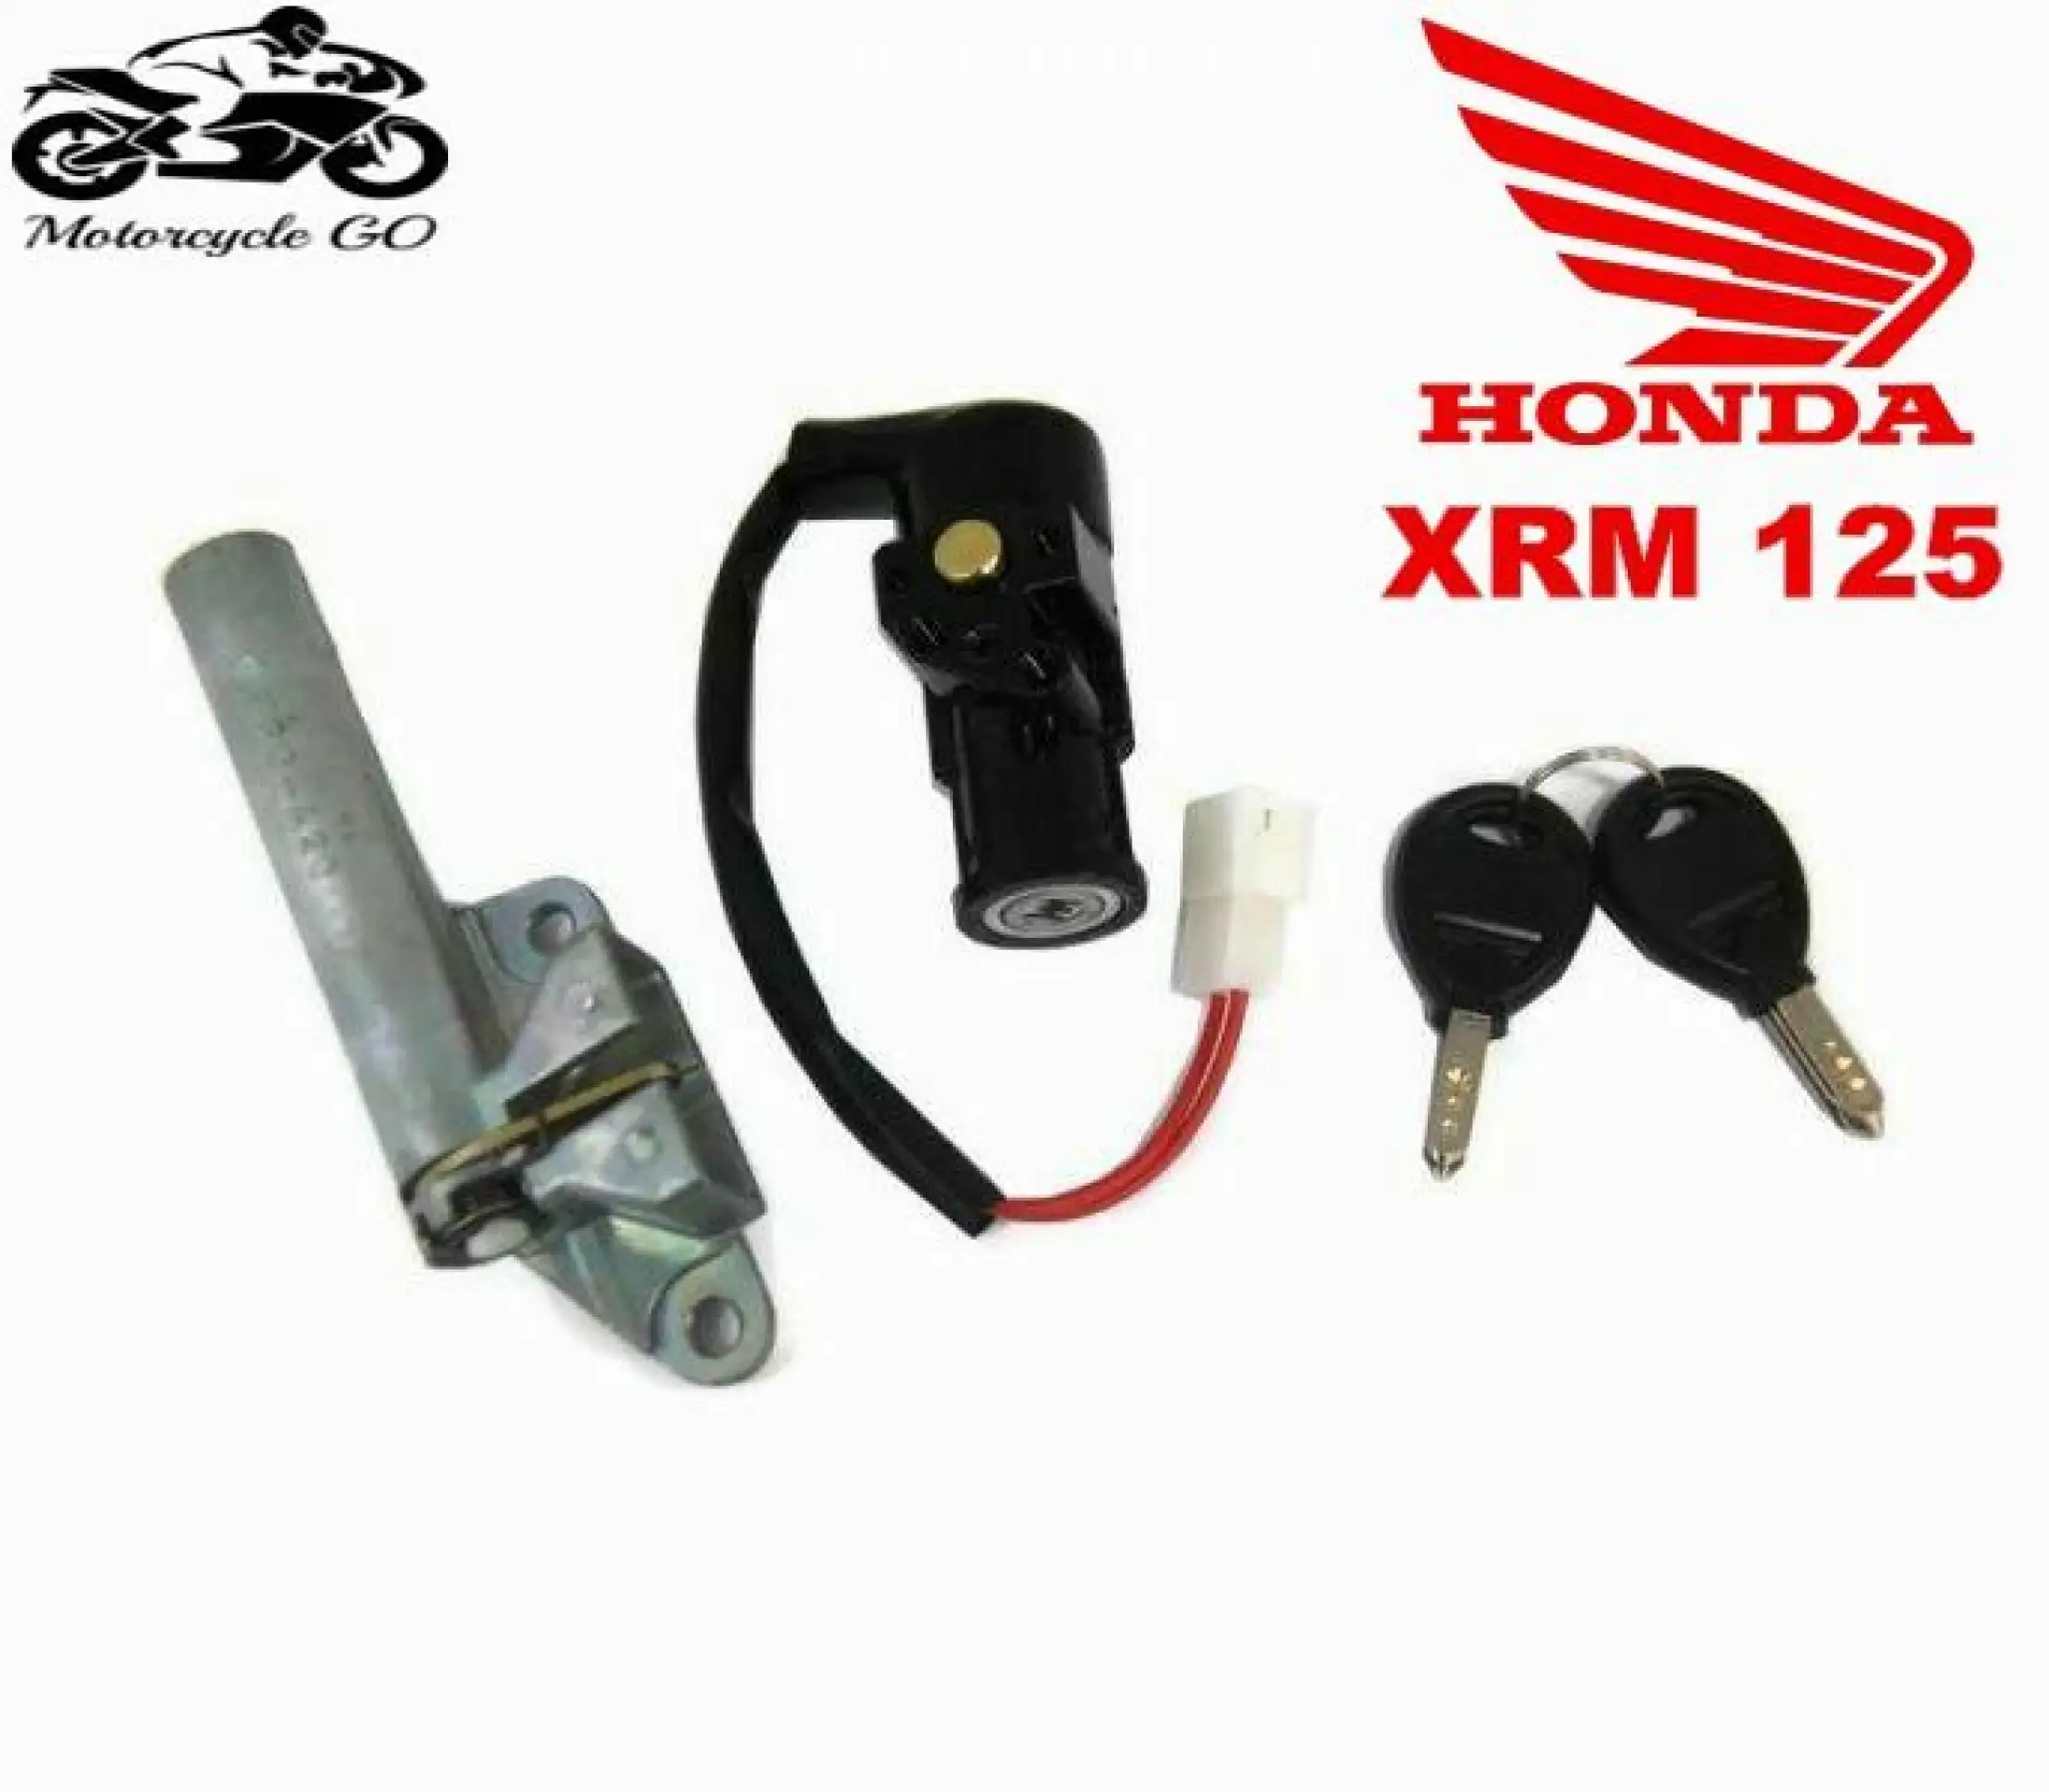 honda bike ignition lock price